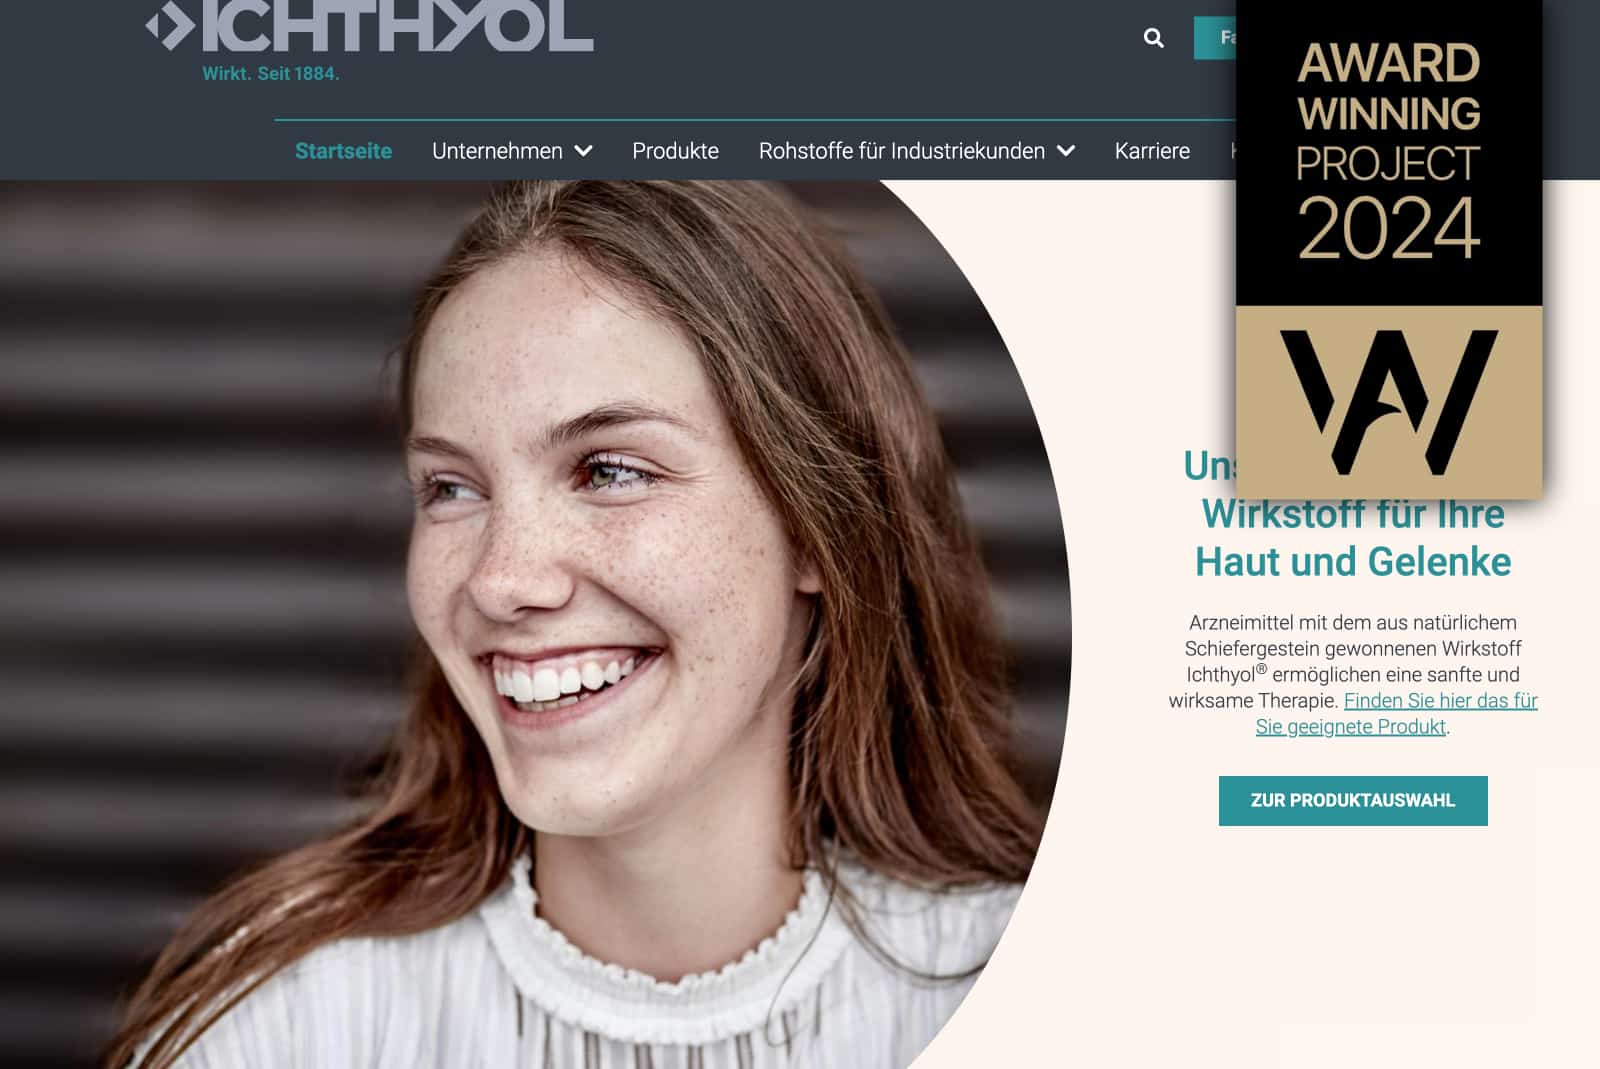 Ichthyol - Startseite - German Web Award Winner Project 2024